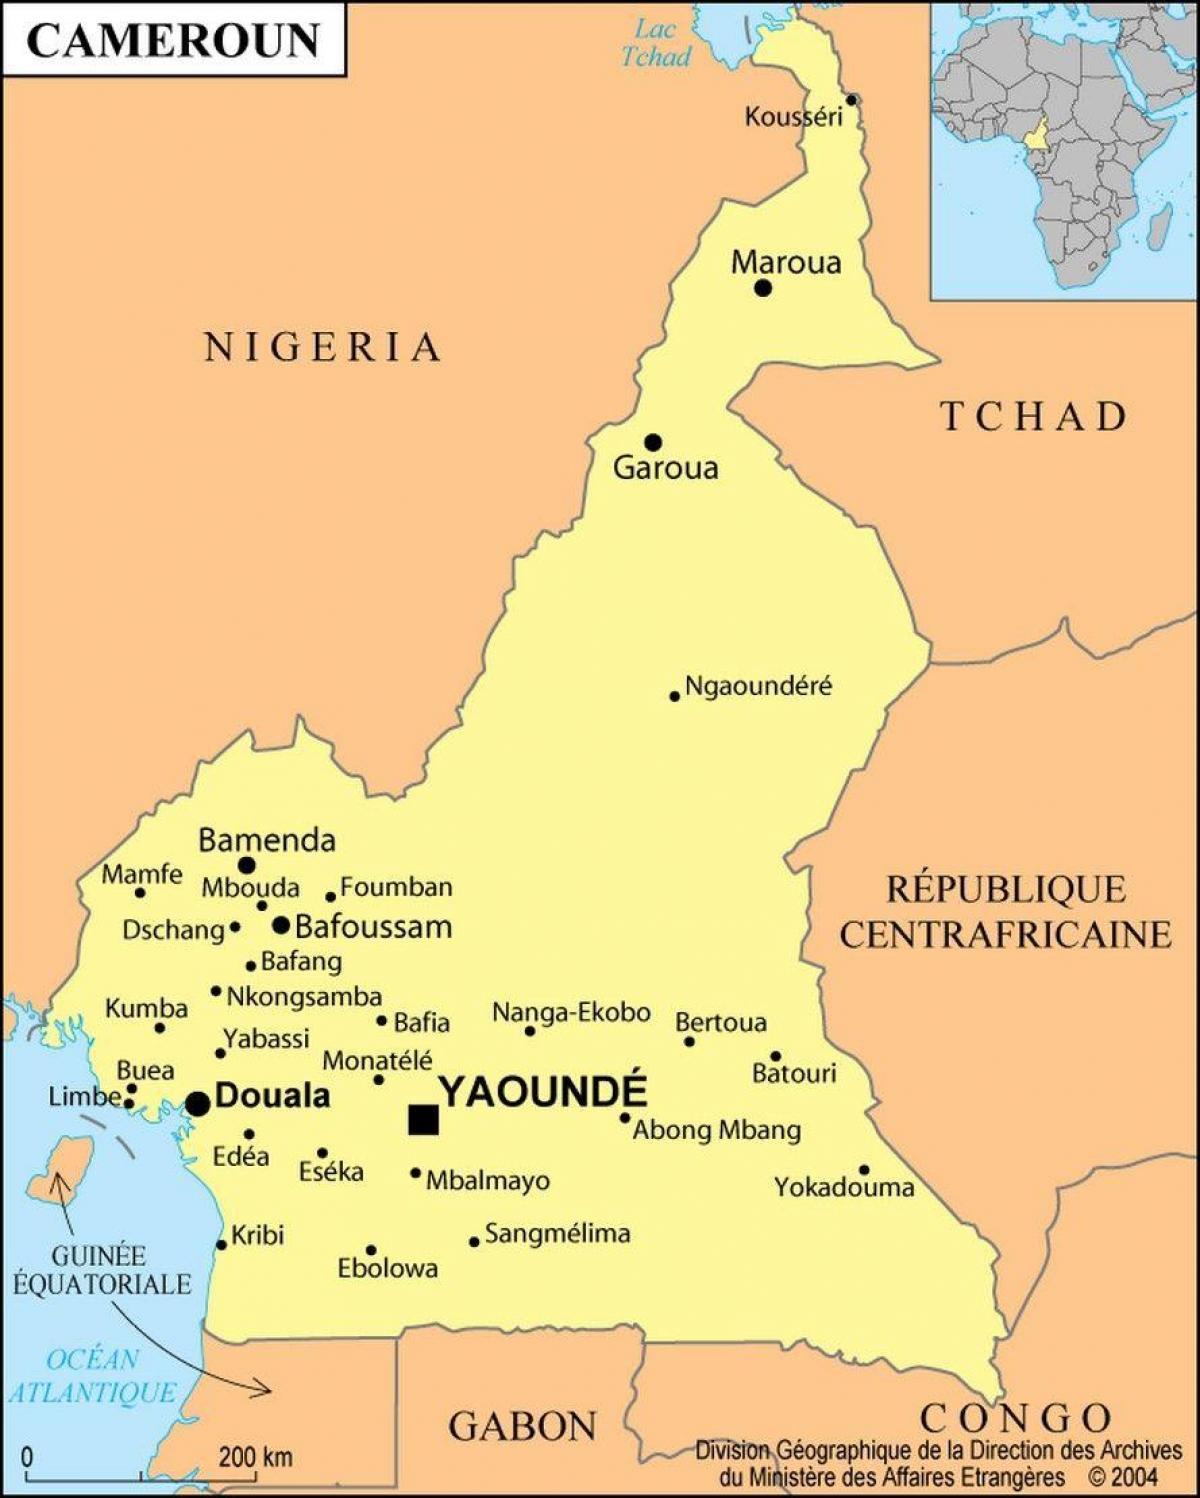 نقشه دوالا کامرون